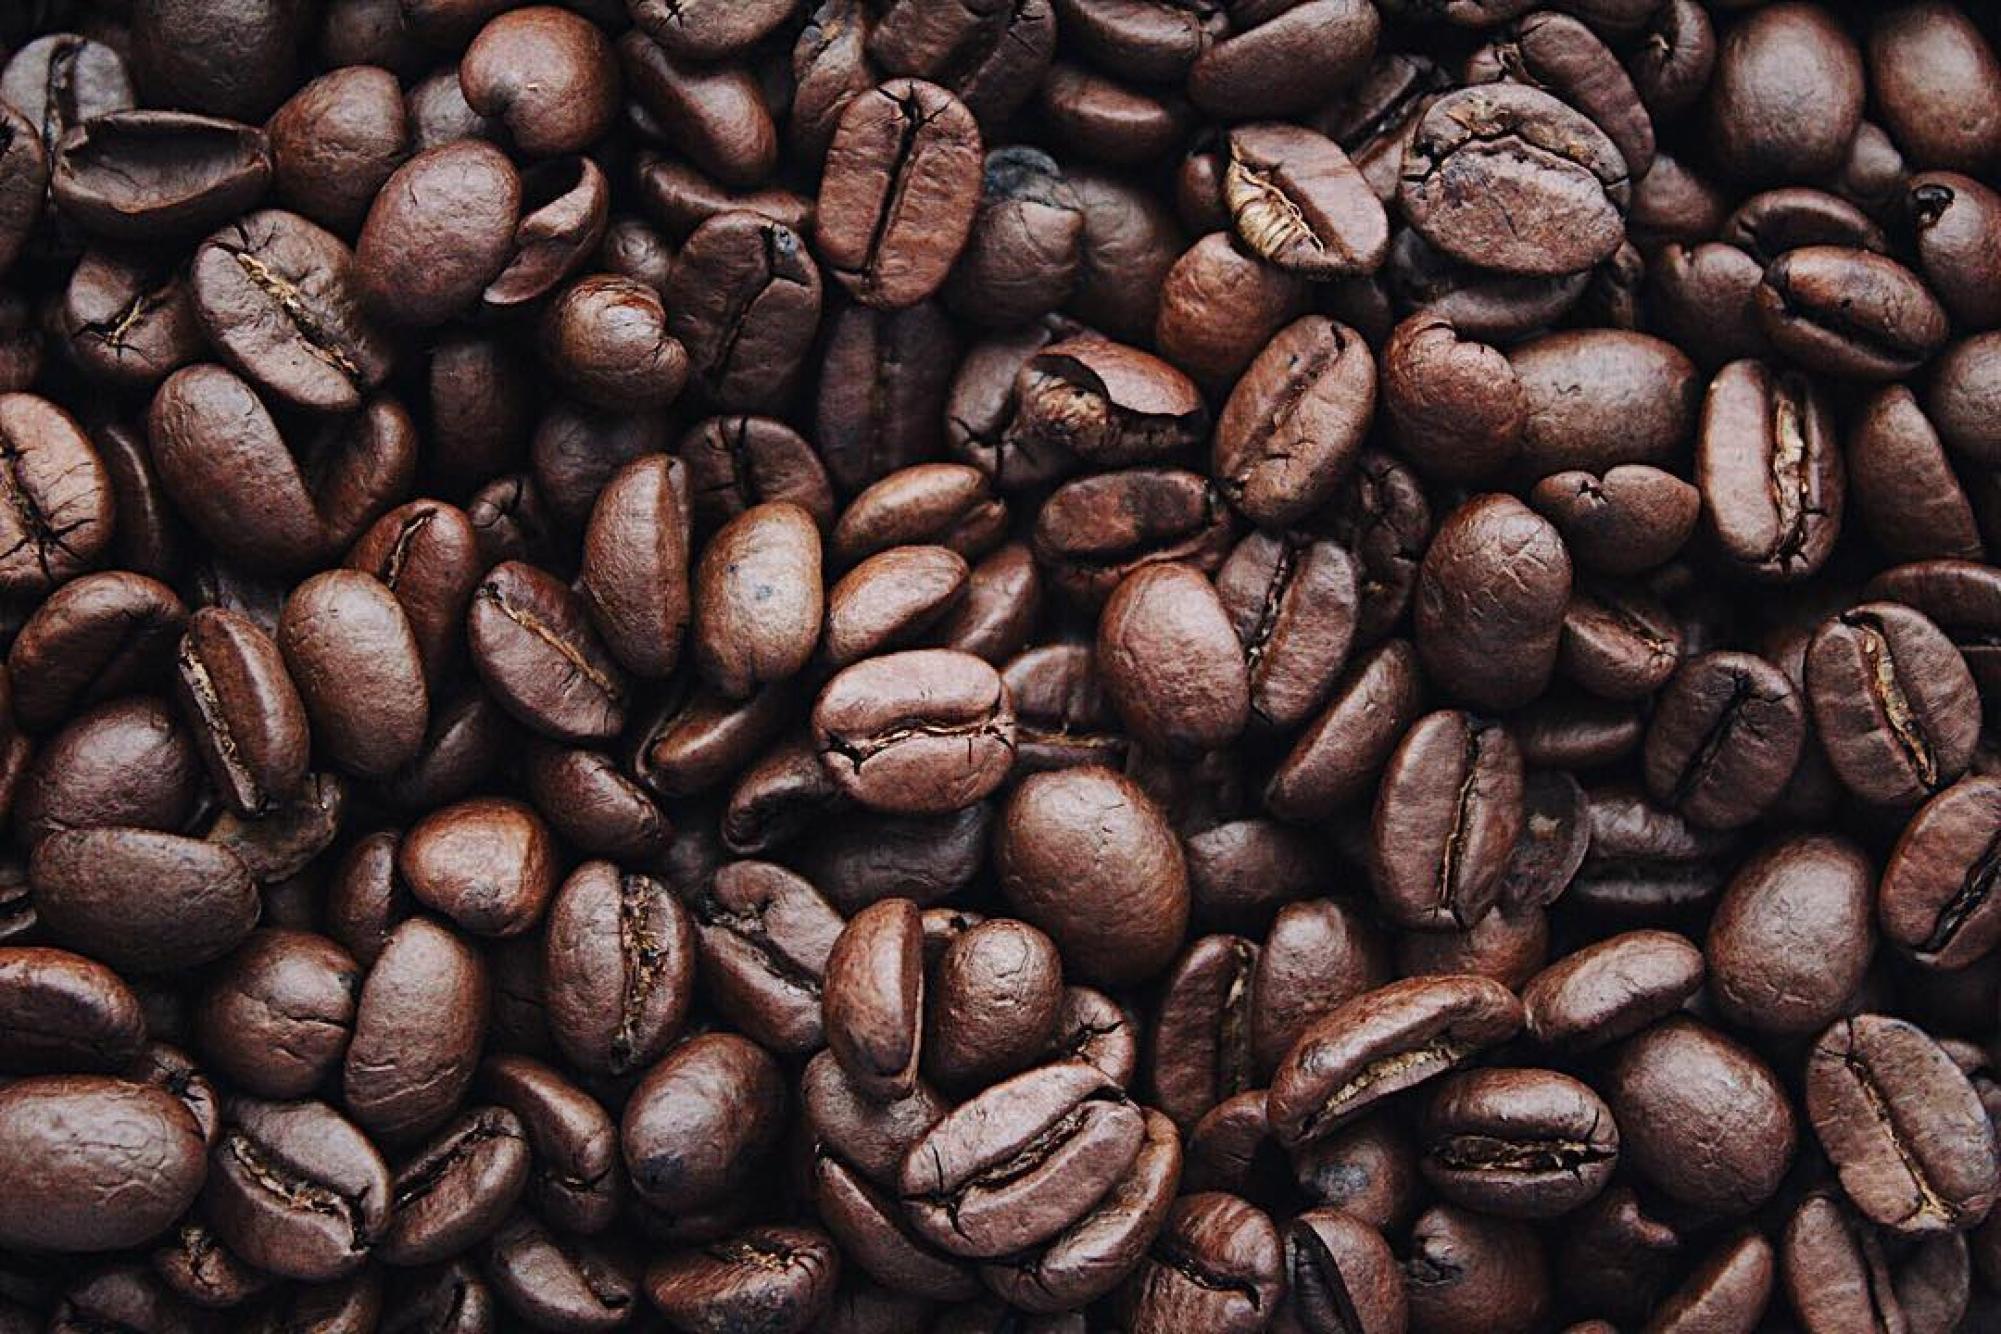 Coffee beans taken by Igor Haritanovich. Image courtesy of Pexels.